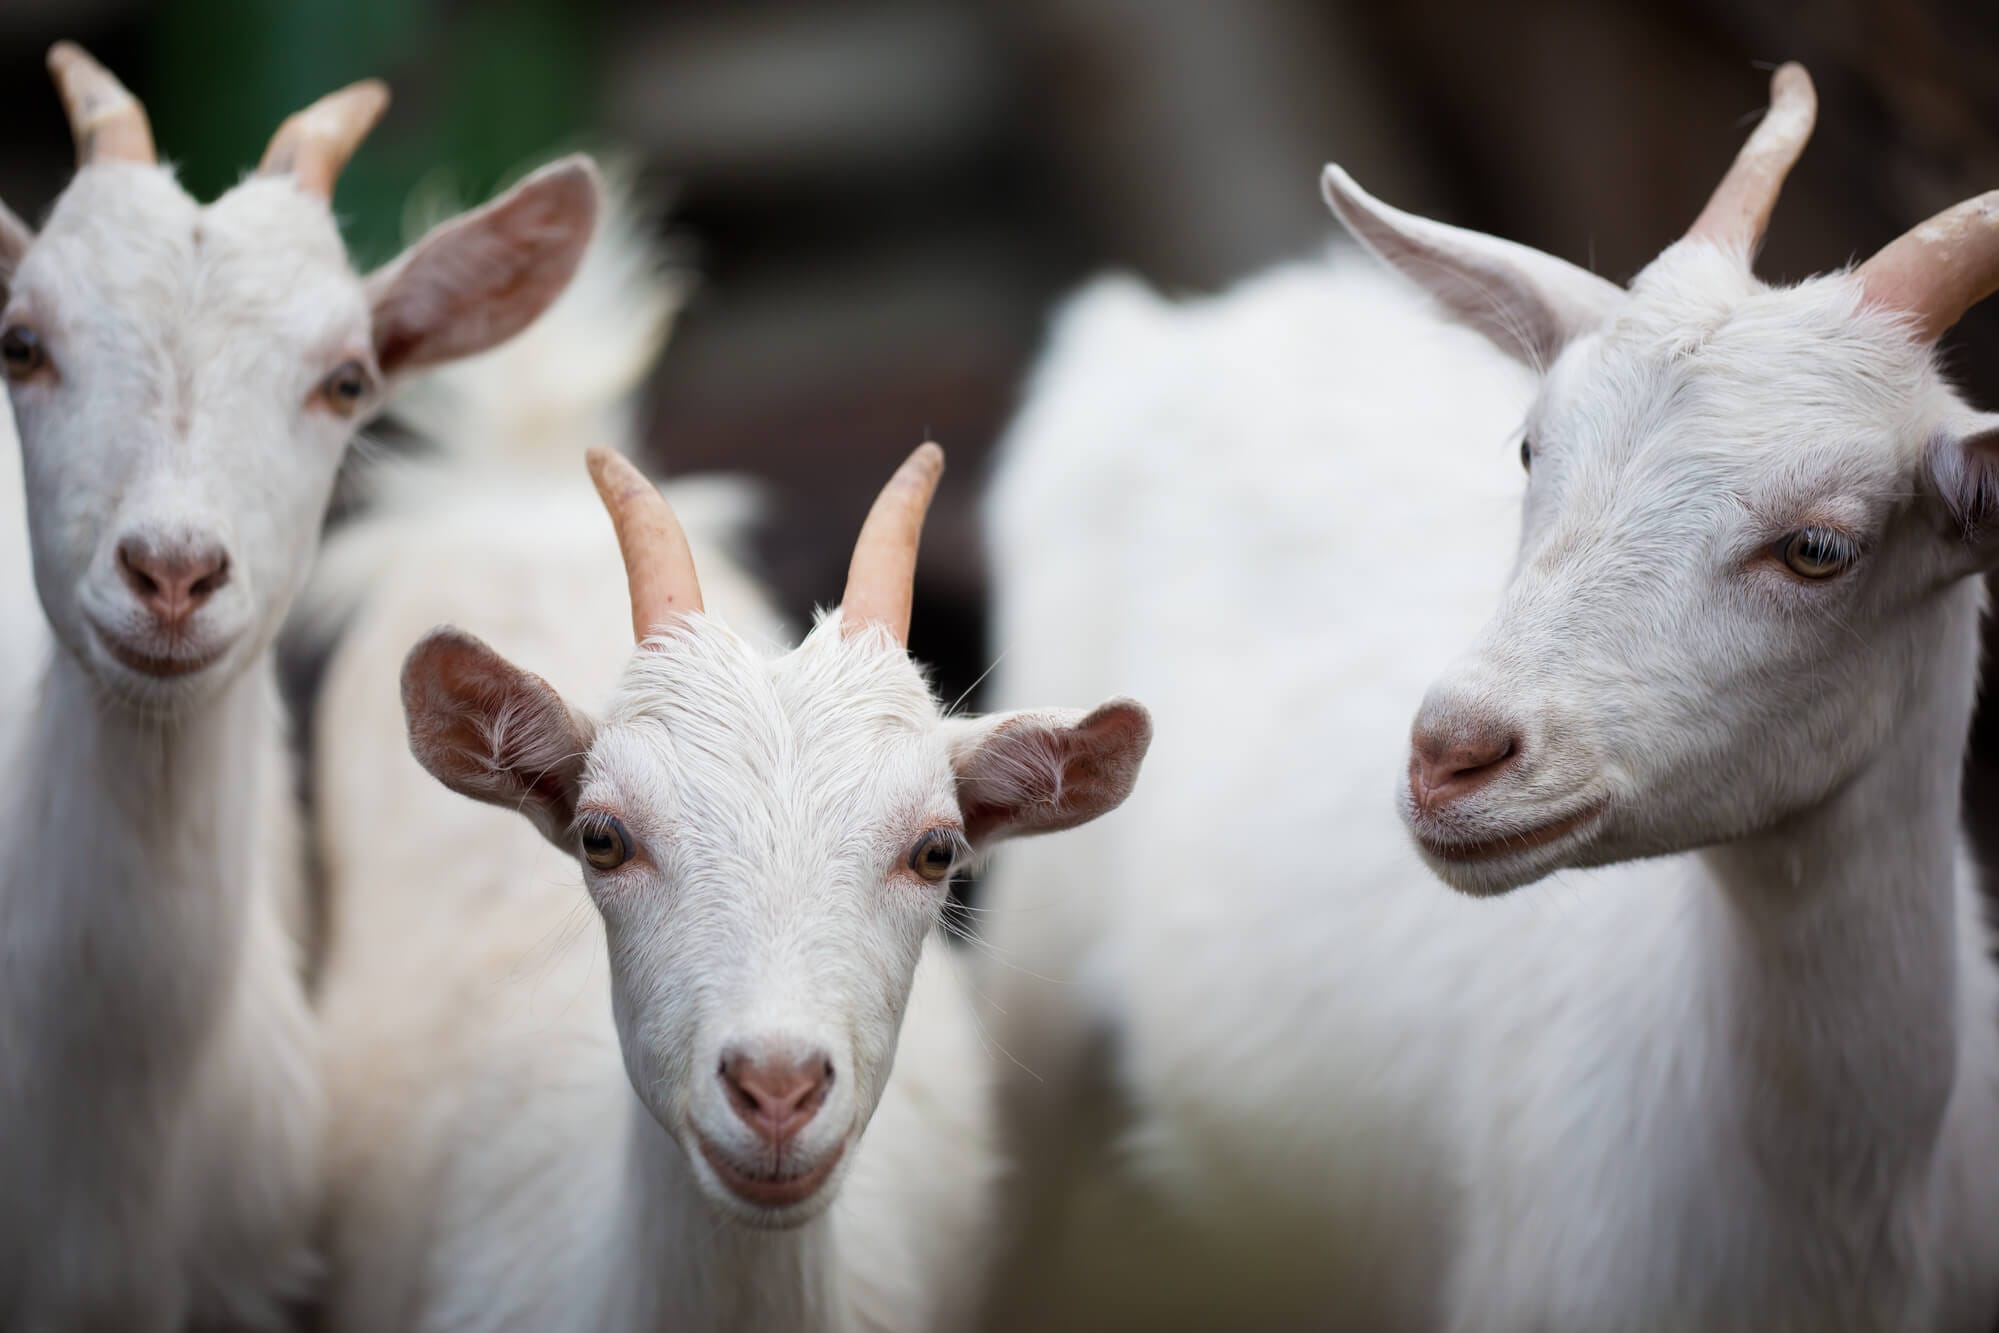 Waste Management. Image shows three white goats